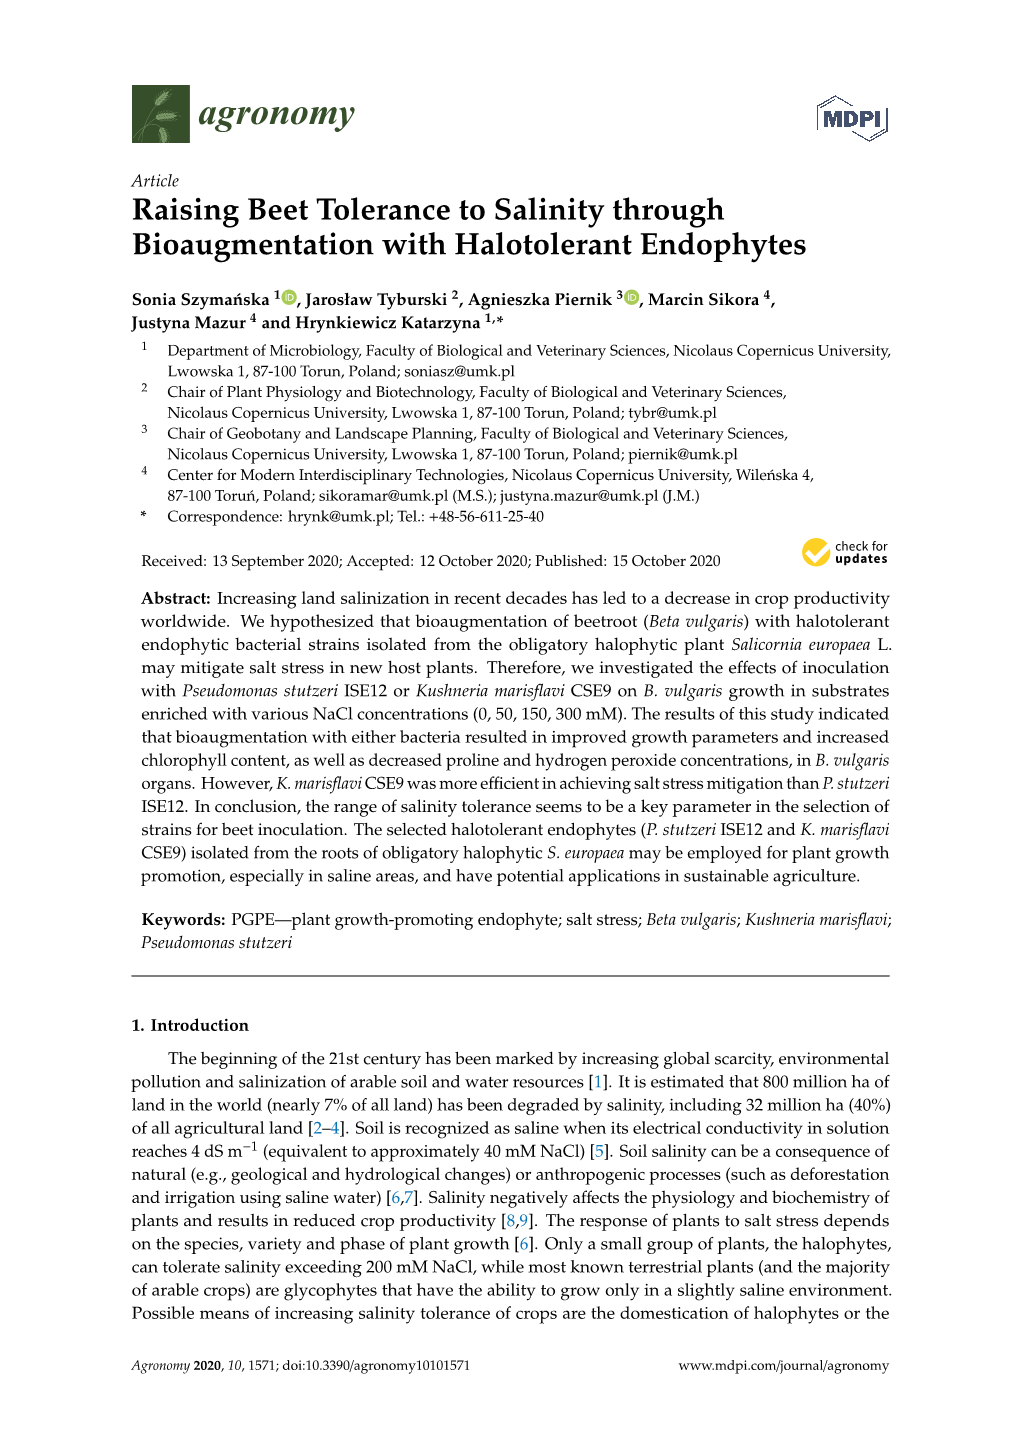 Raising Beet Tolerance to Salinity Through Bioaugmentation with Halotolerant Endophytes